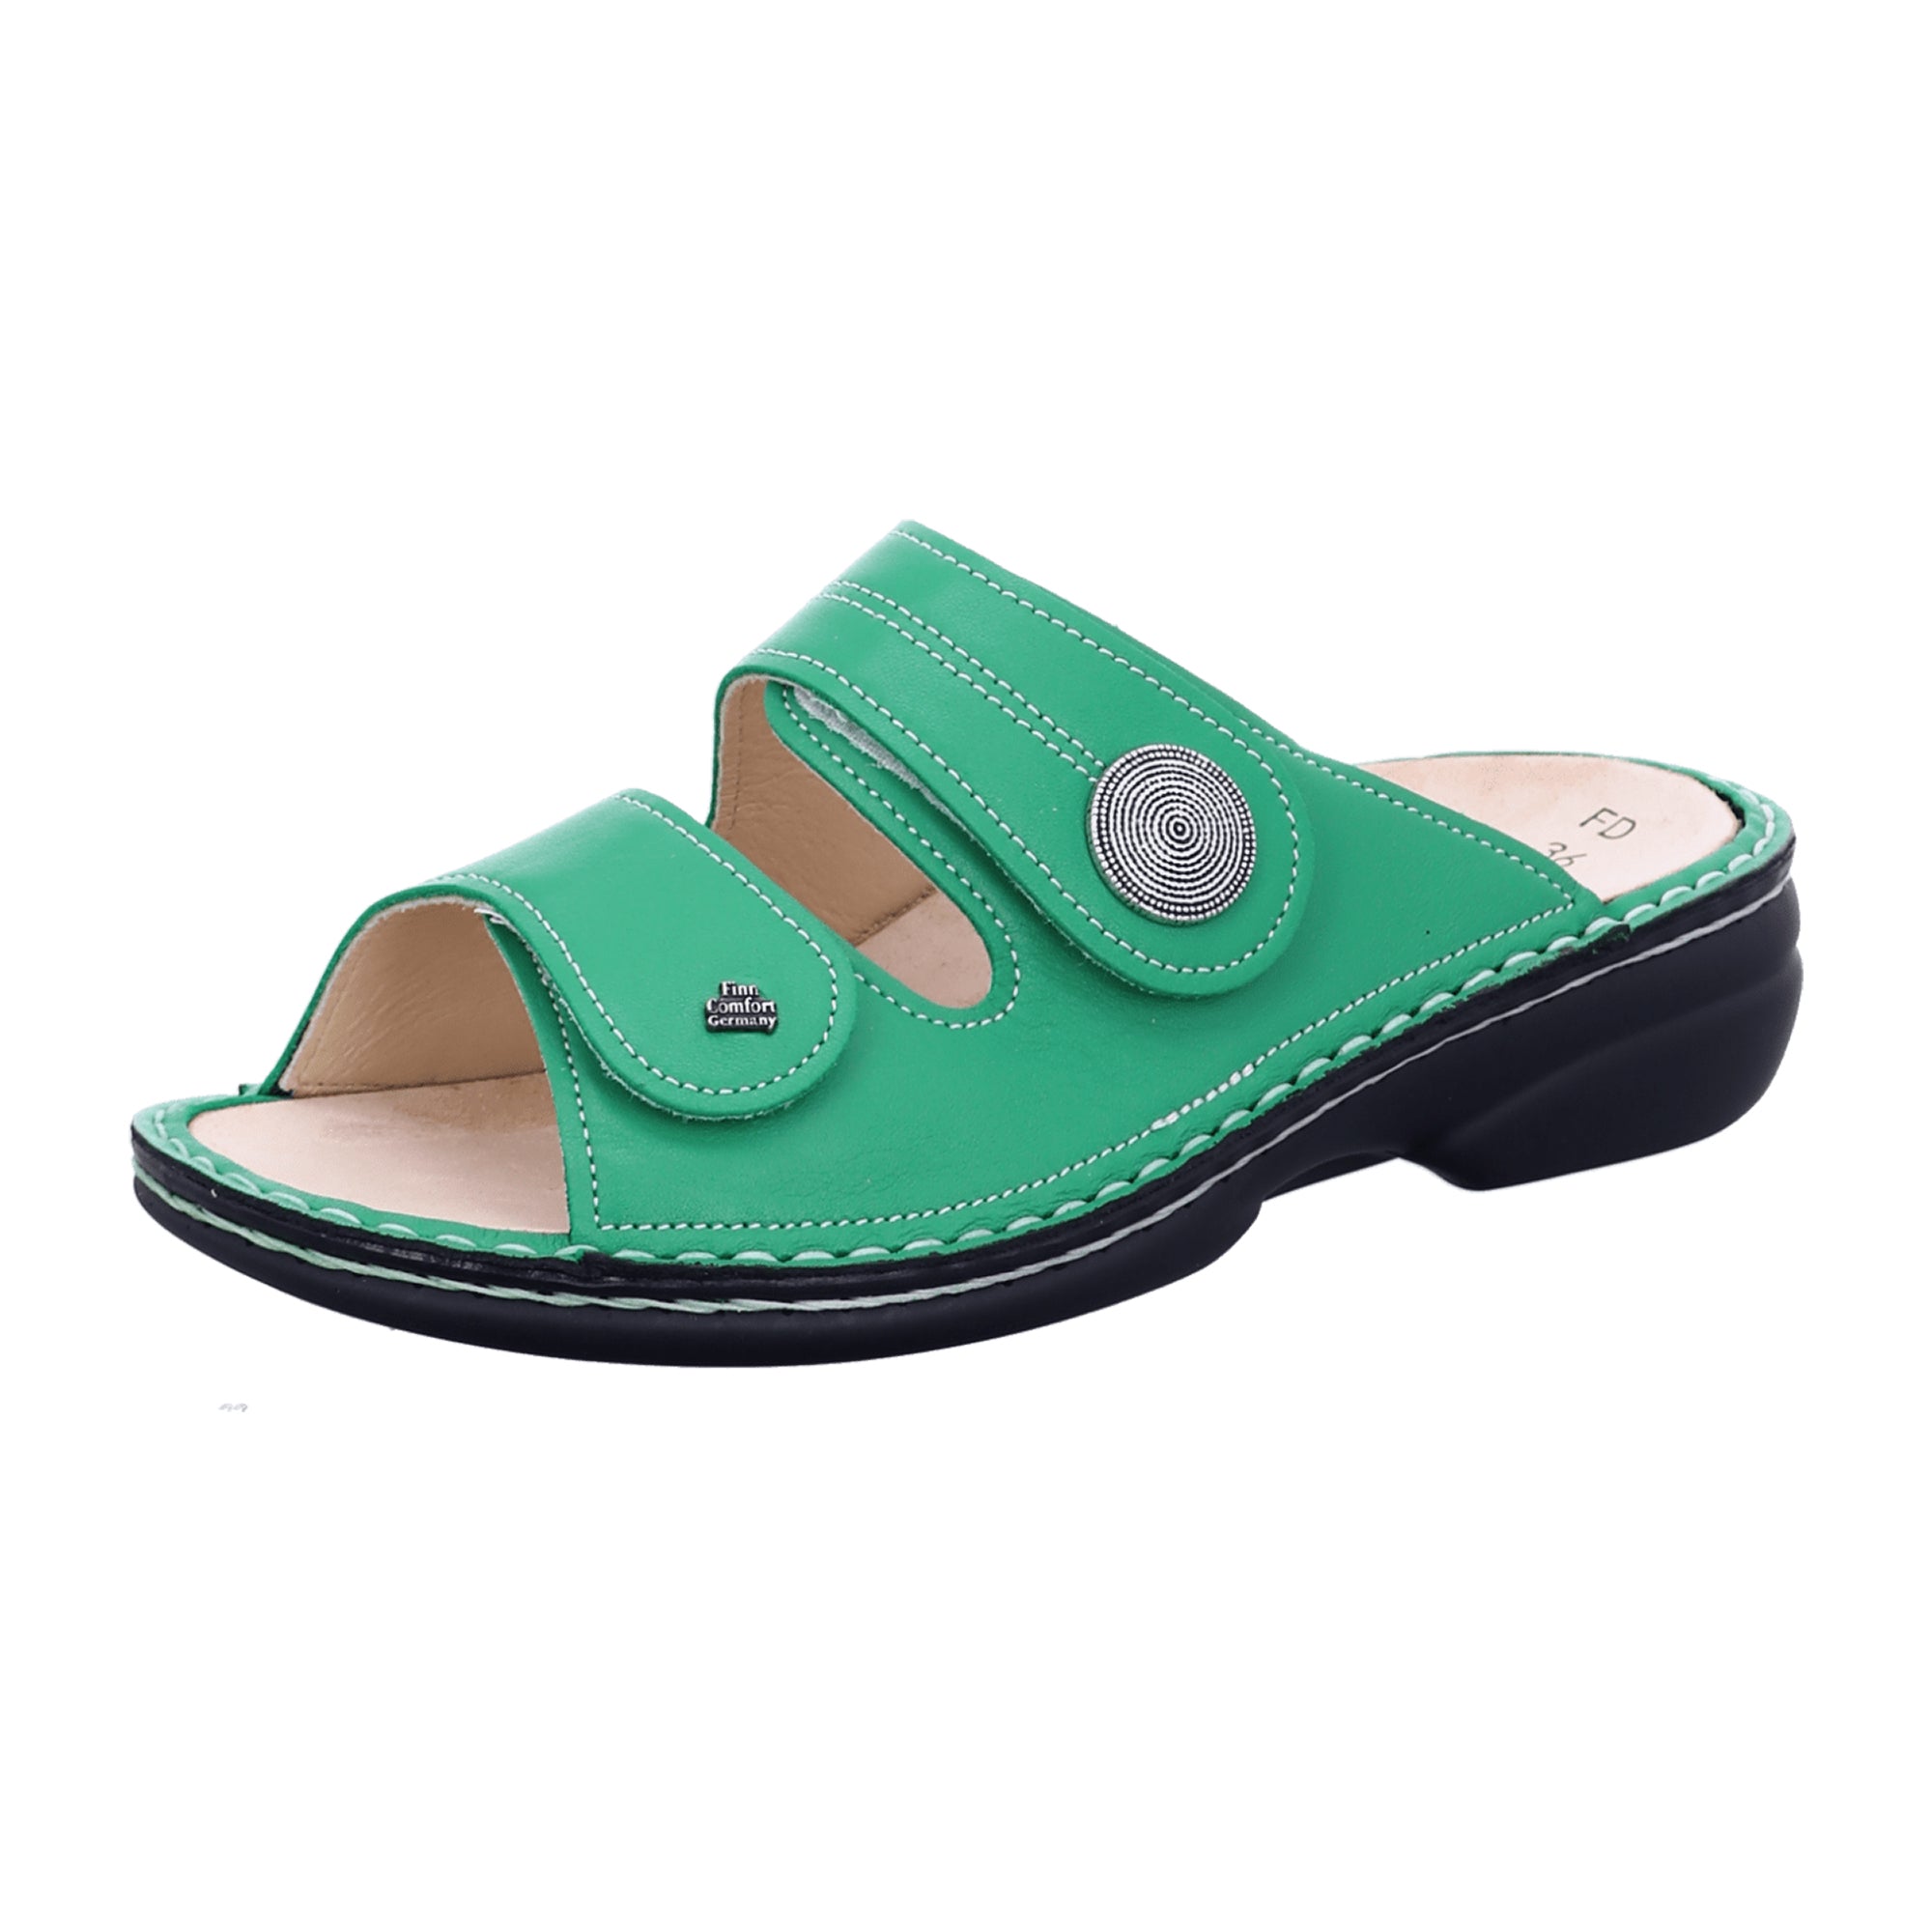 Finn Comfort Sansibar Women's Sandals - Stylish & Comfortable Green Sandals